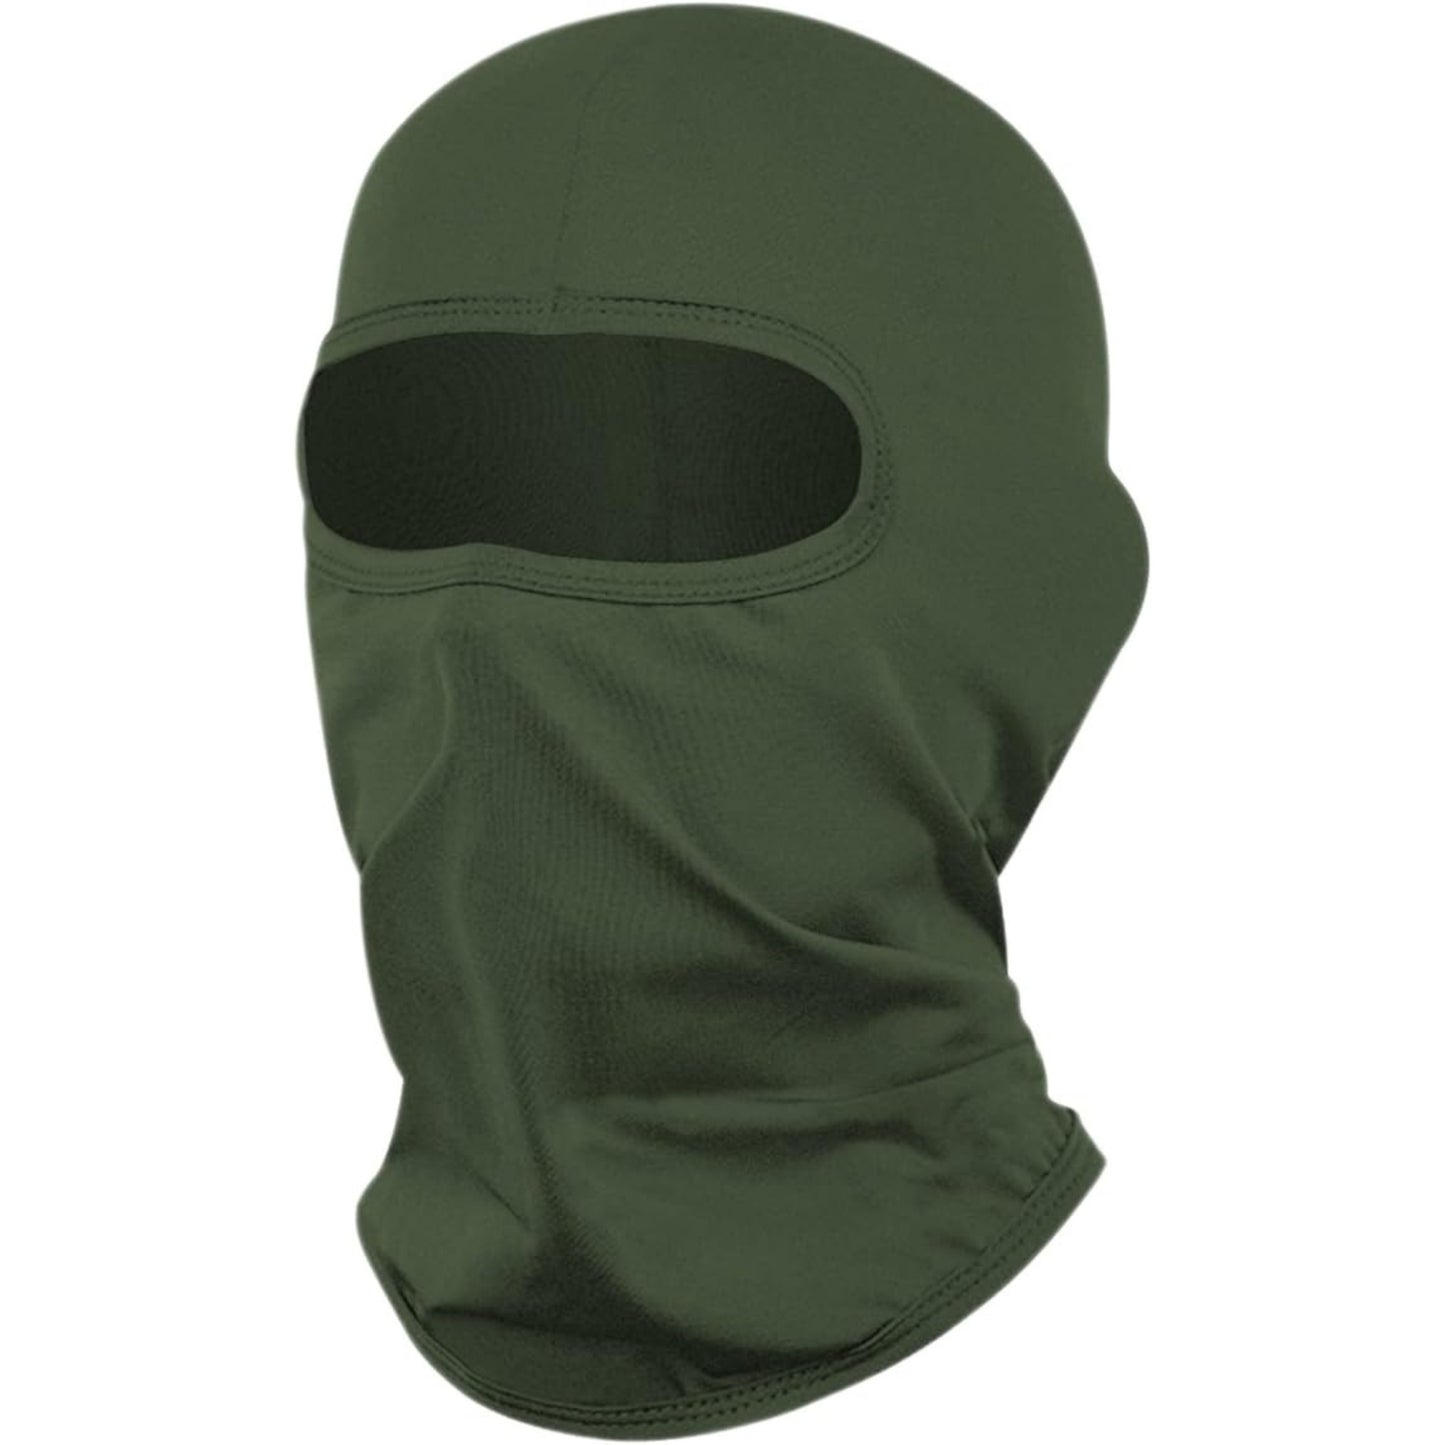 Army green Ninja ski mask 18 in lightweight, soft and comfortable balaclava